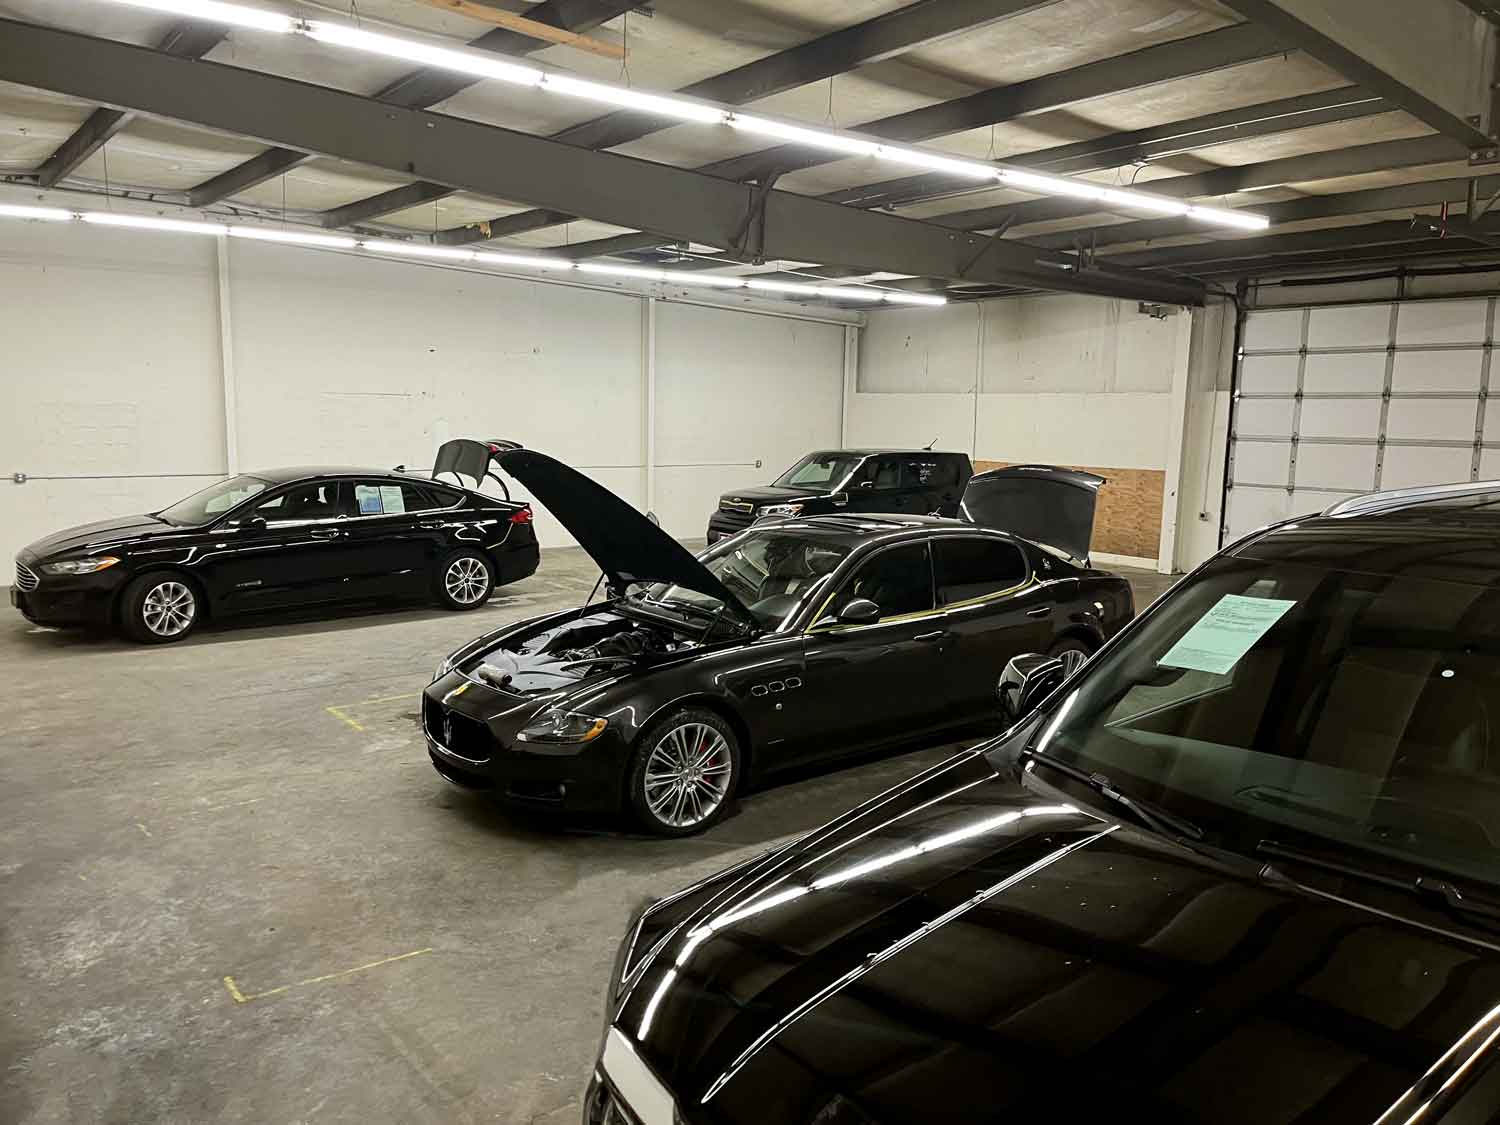 RestorFX Renton shop area with a black Bentley, black Ford and black Kia Soul